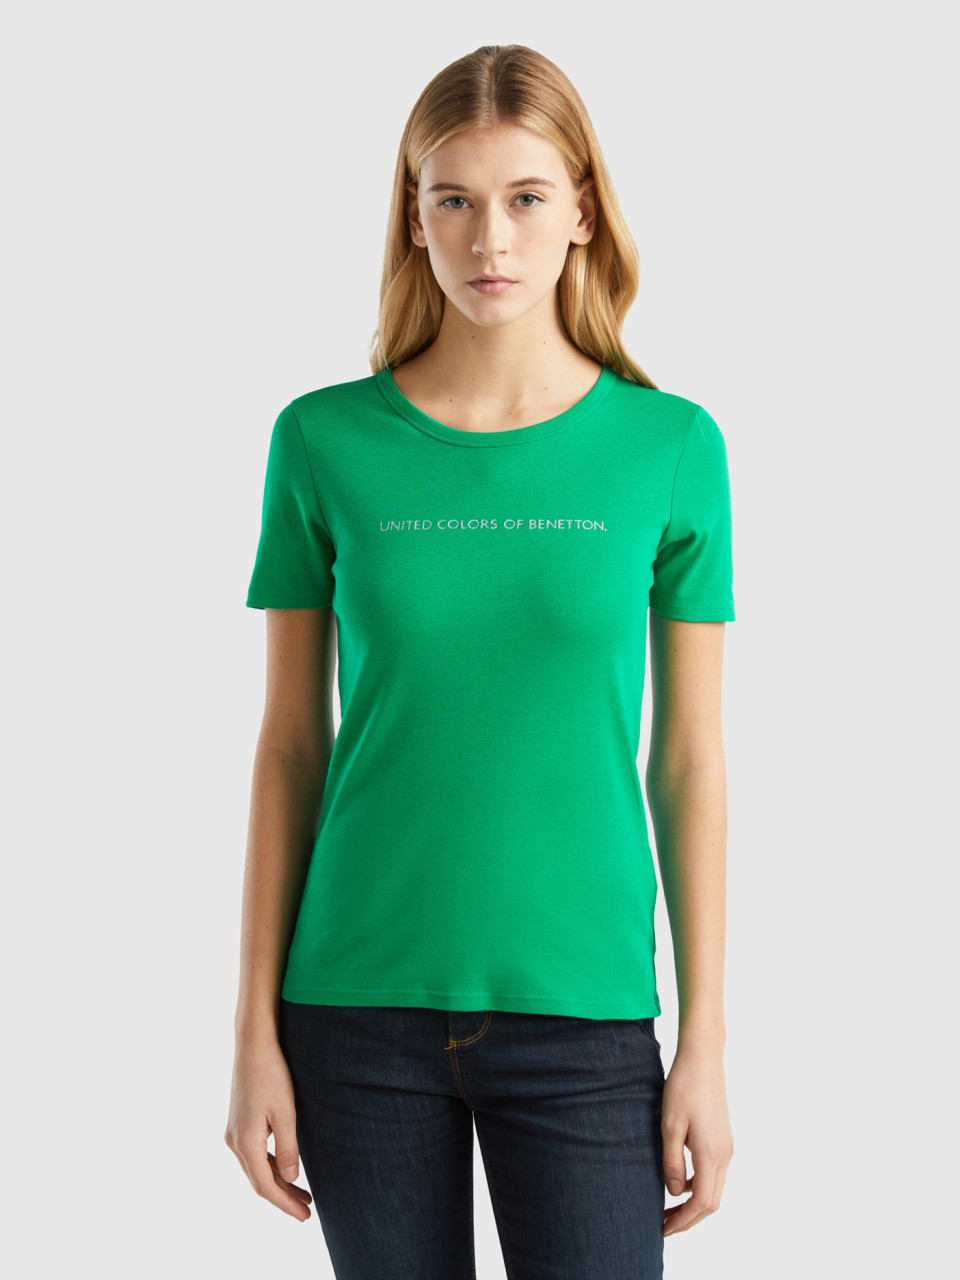 Benetton, T-shirt In 100% Cotton With Glitter Print Logo, Green, Women